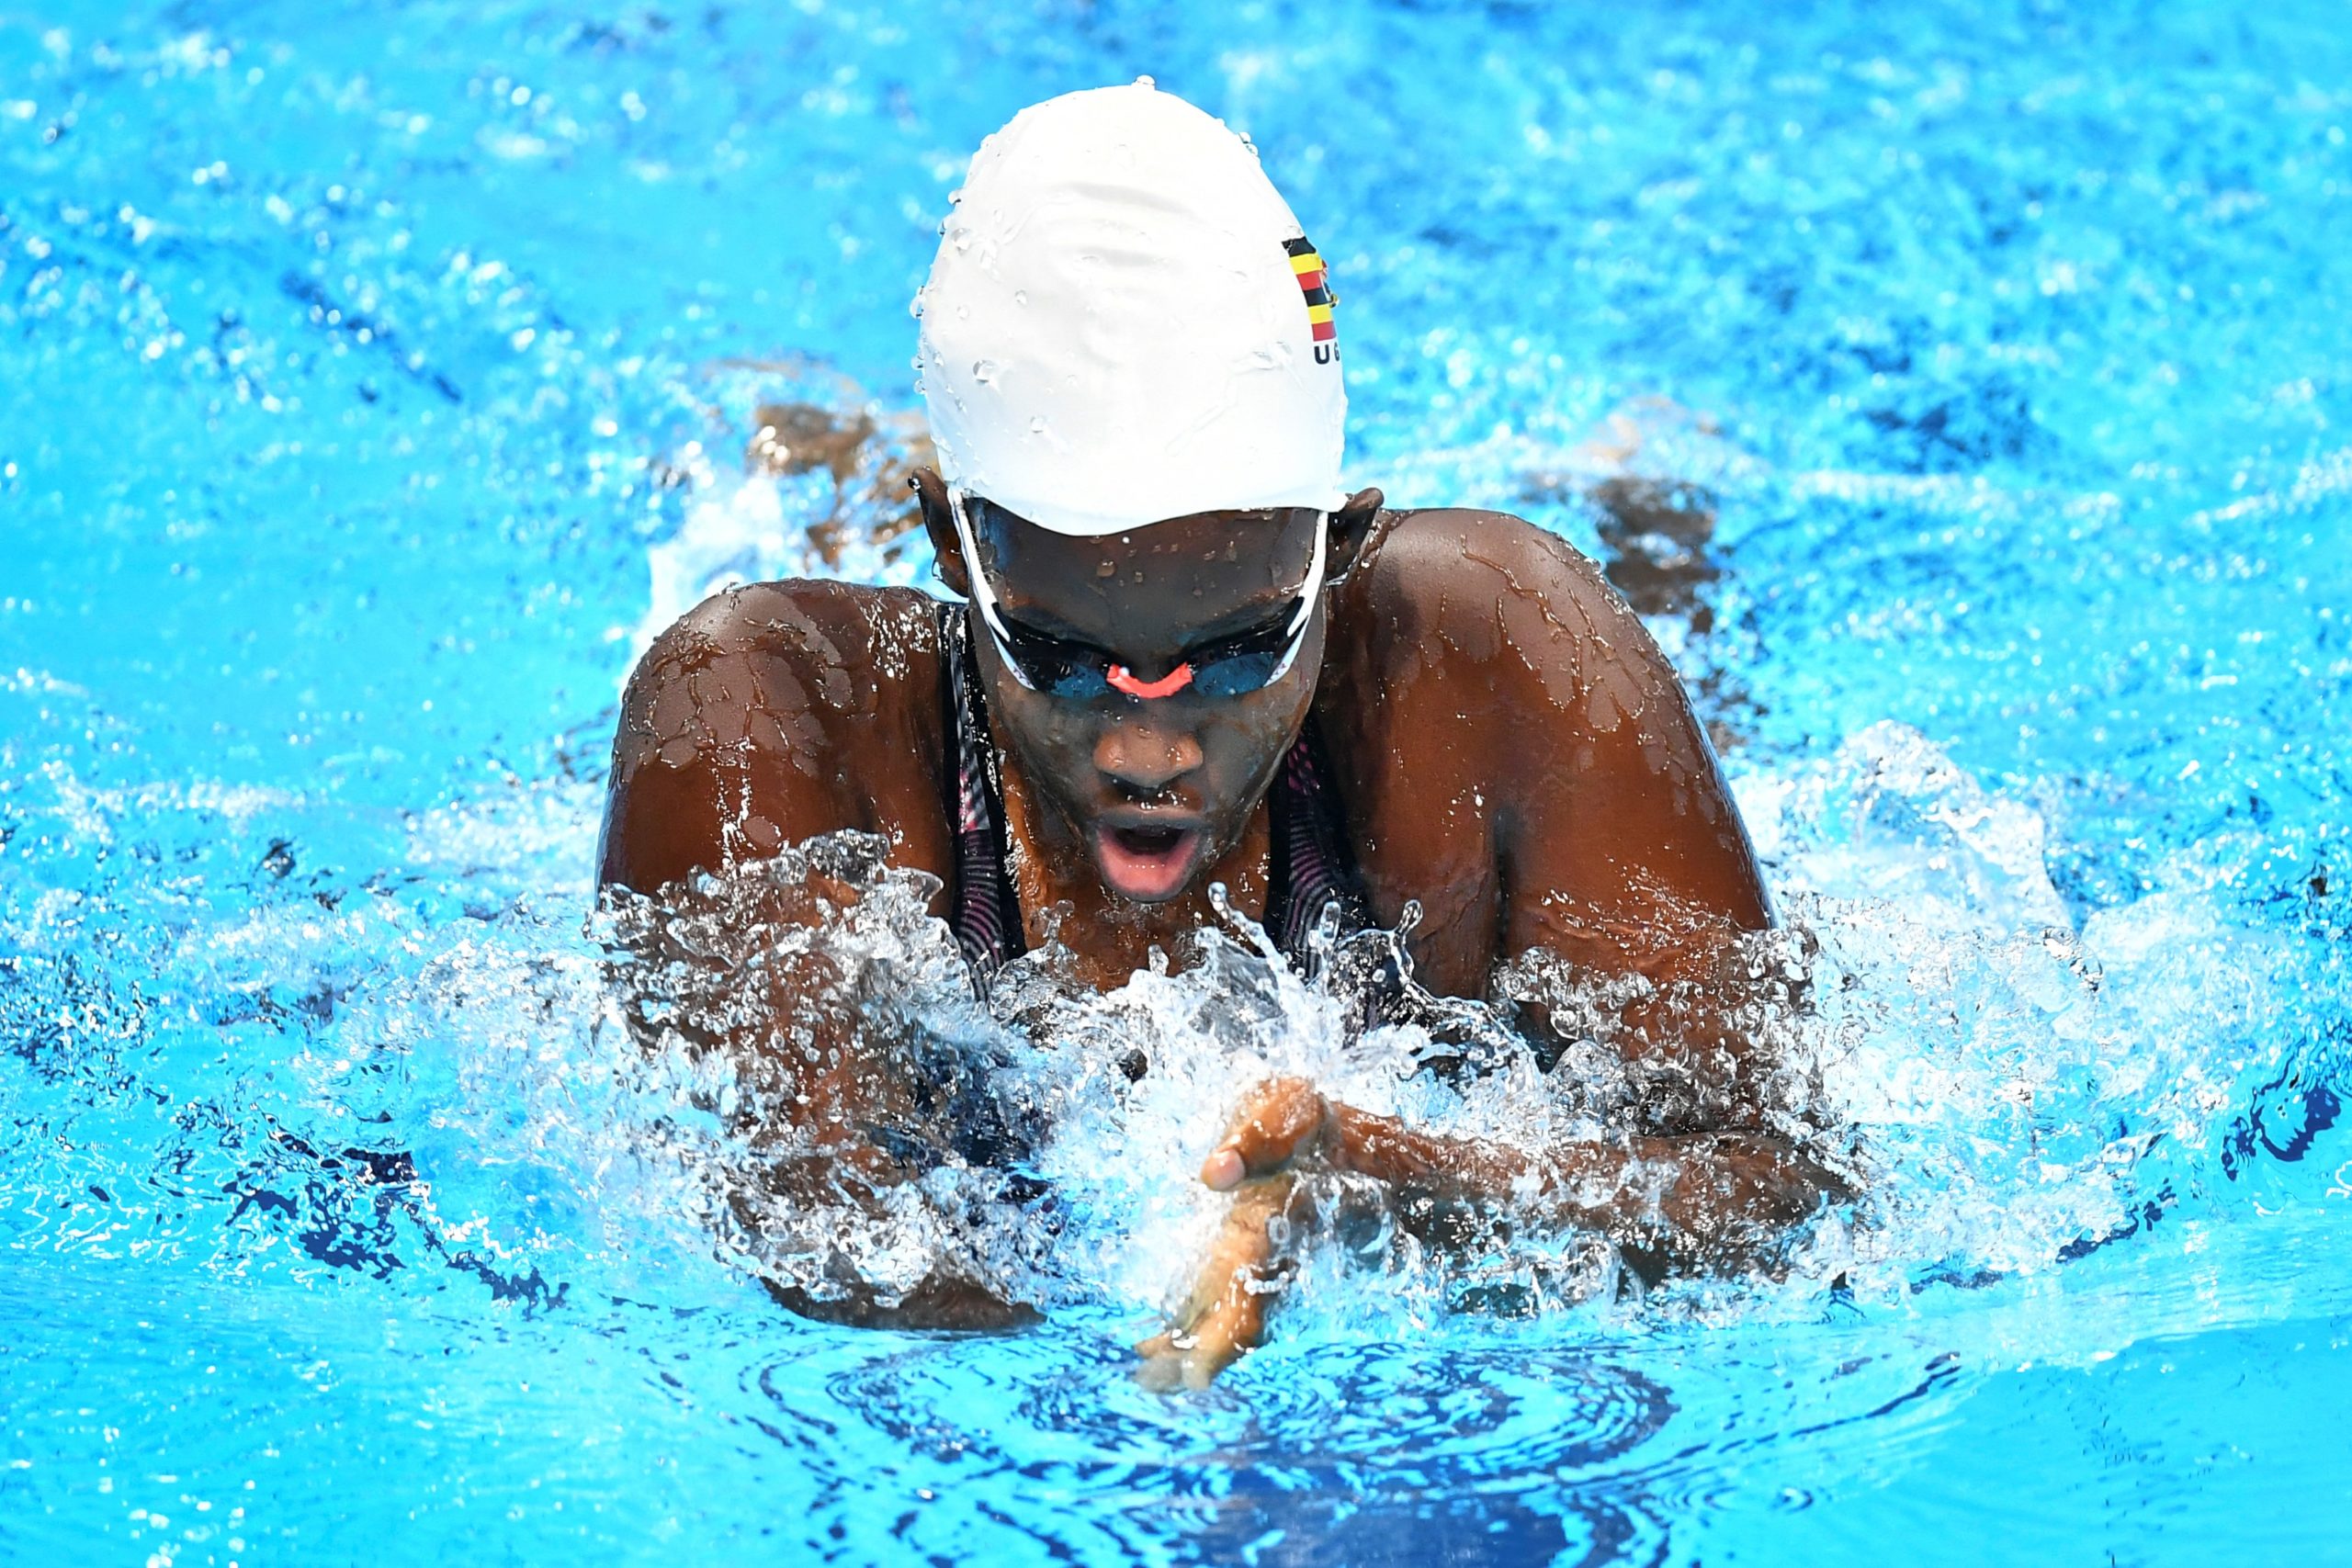 Ugandan swimmer Husnah Kukundakwe